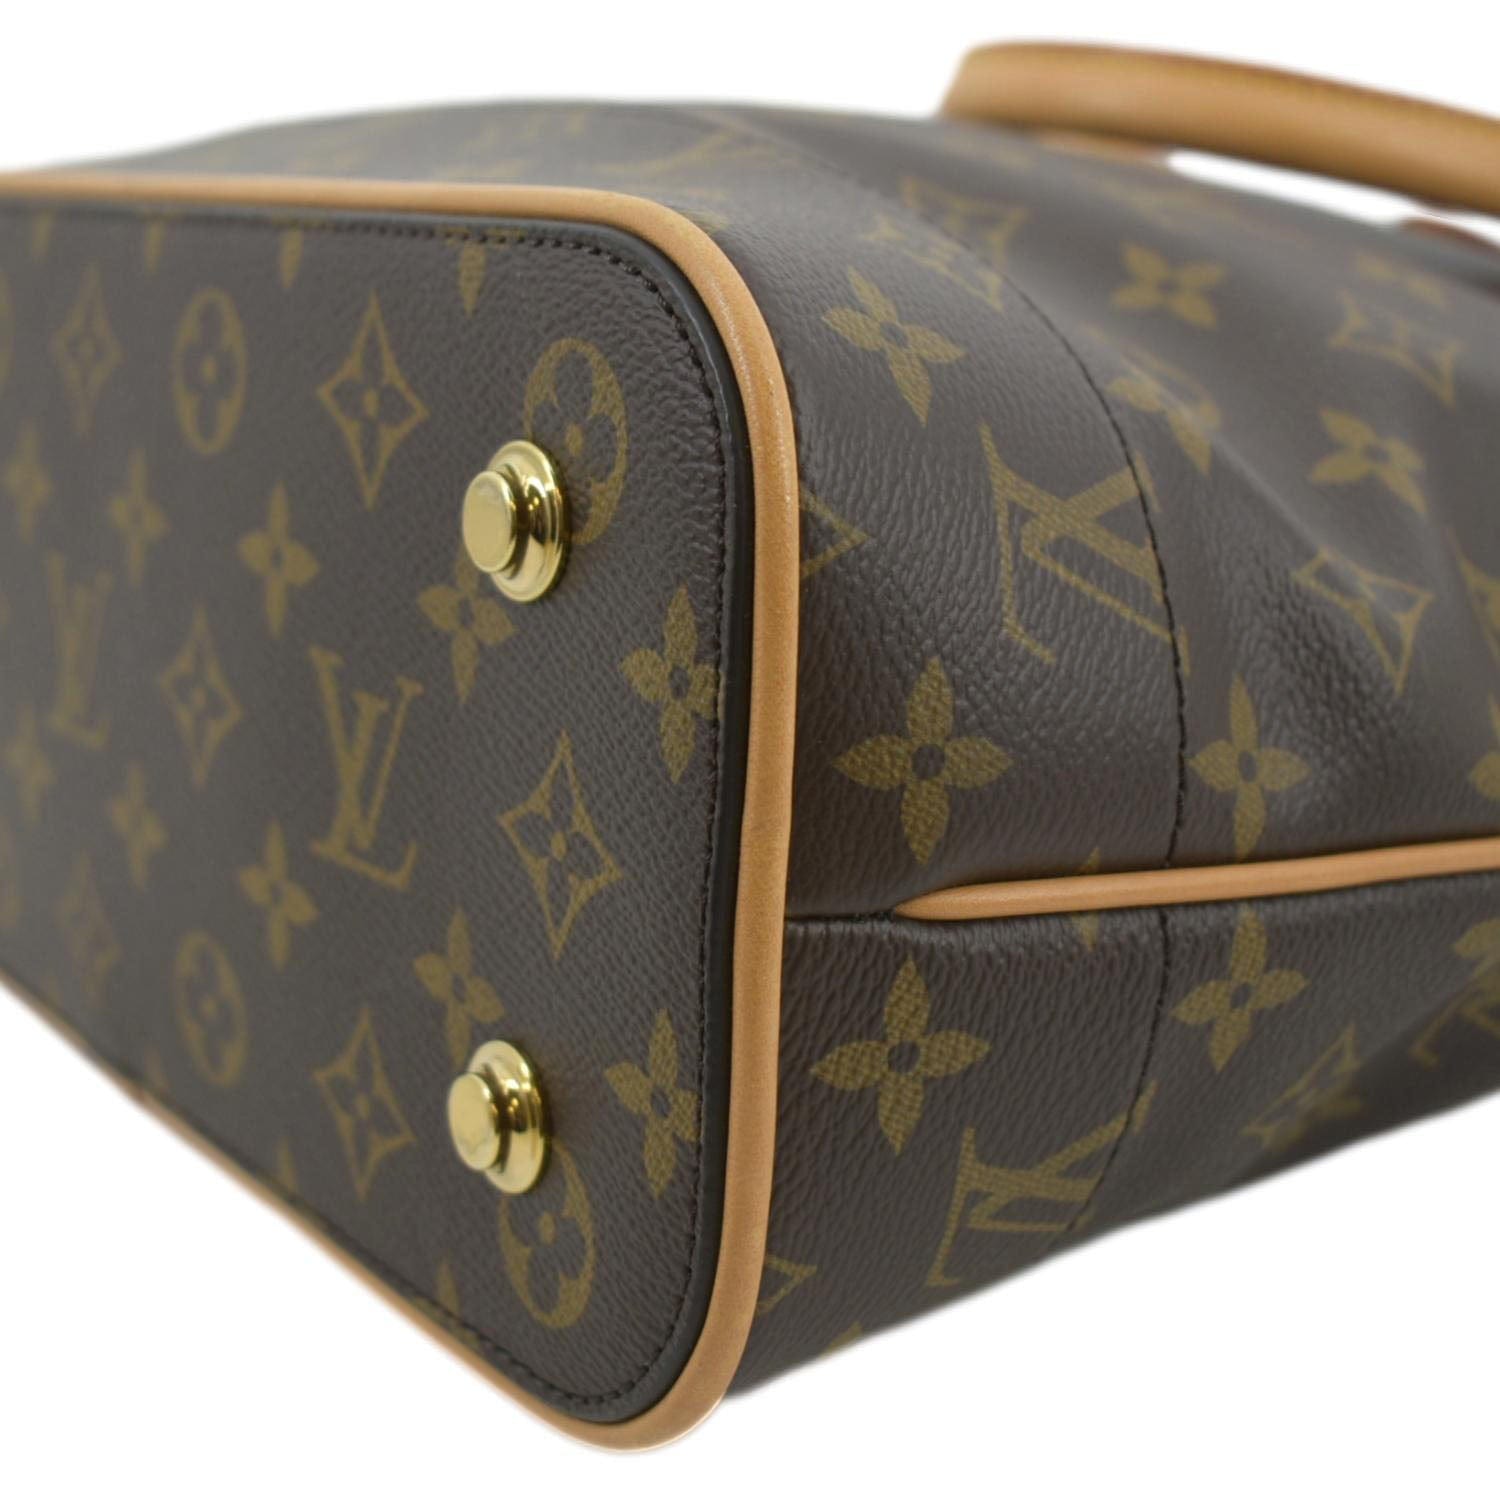 Louis Vuitton - LV Carry All MM Pochette in Monogram Canvas - Brown  Wristlet